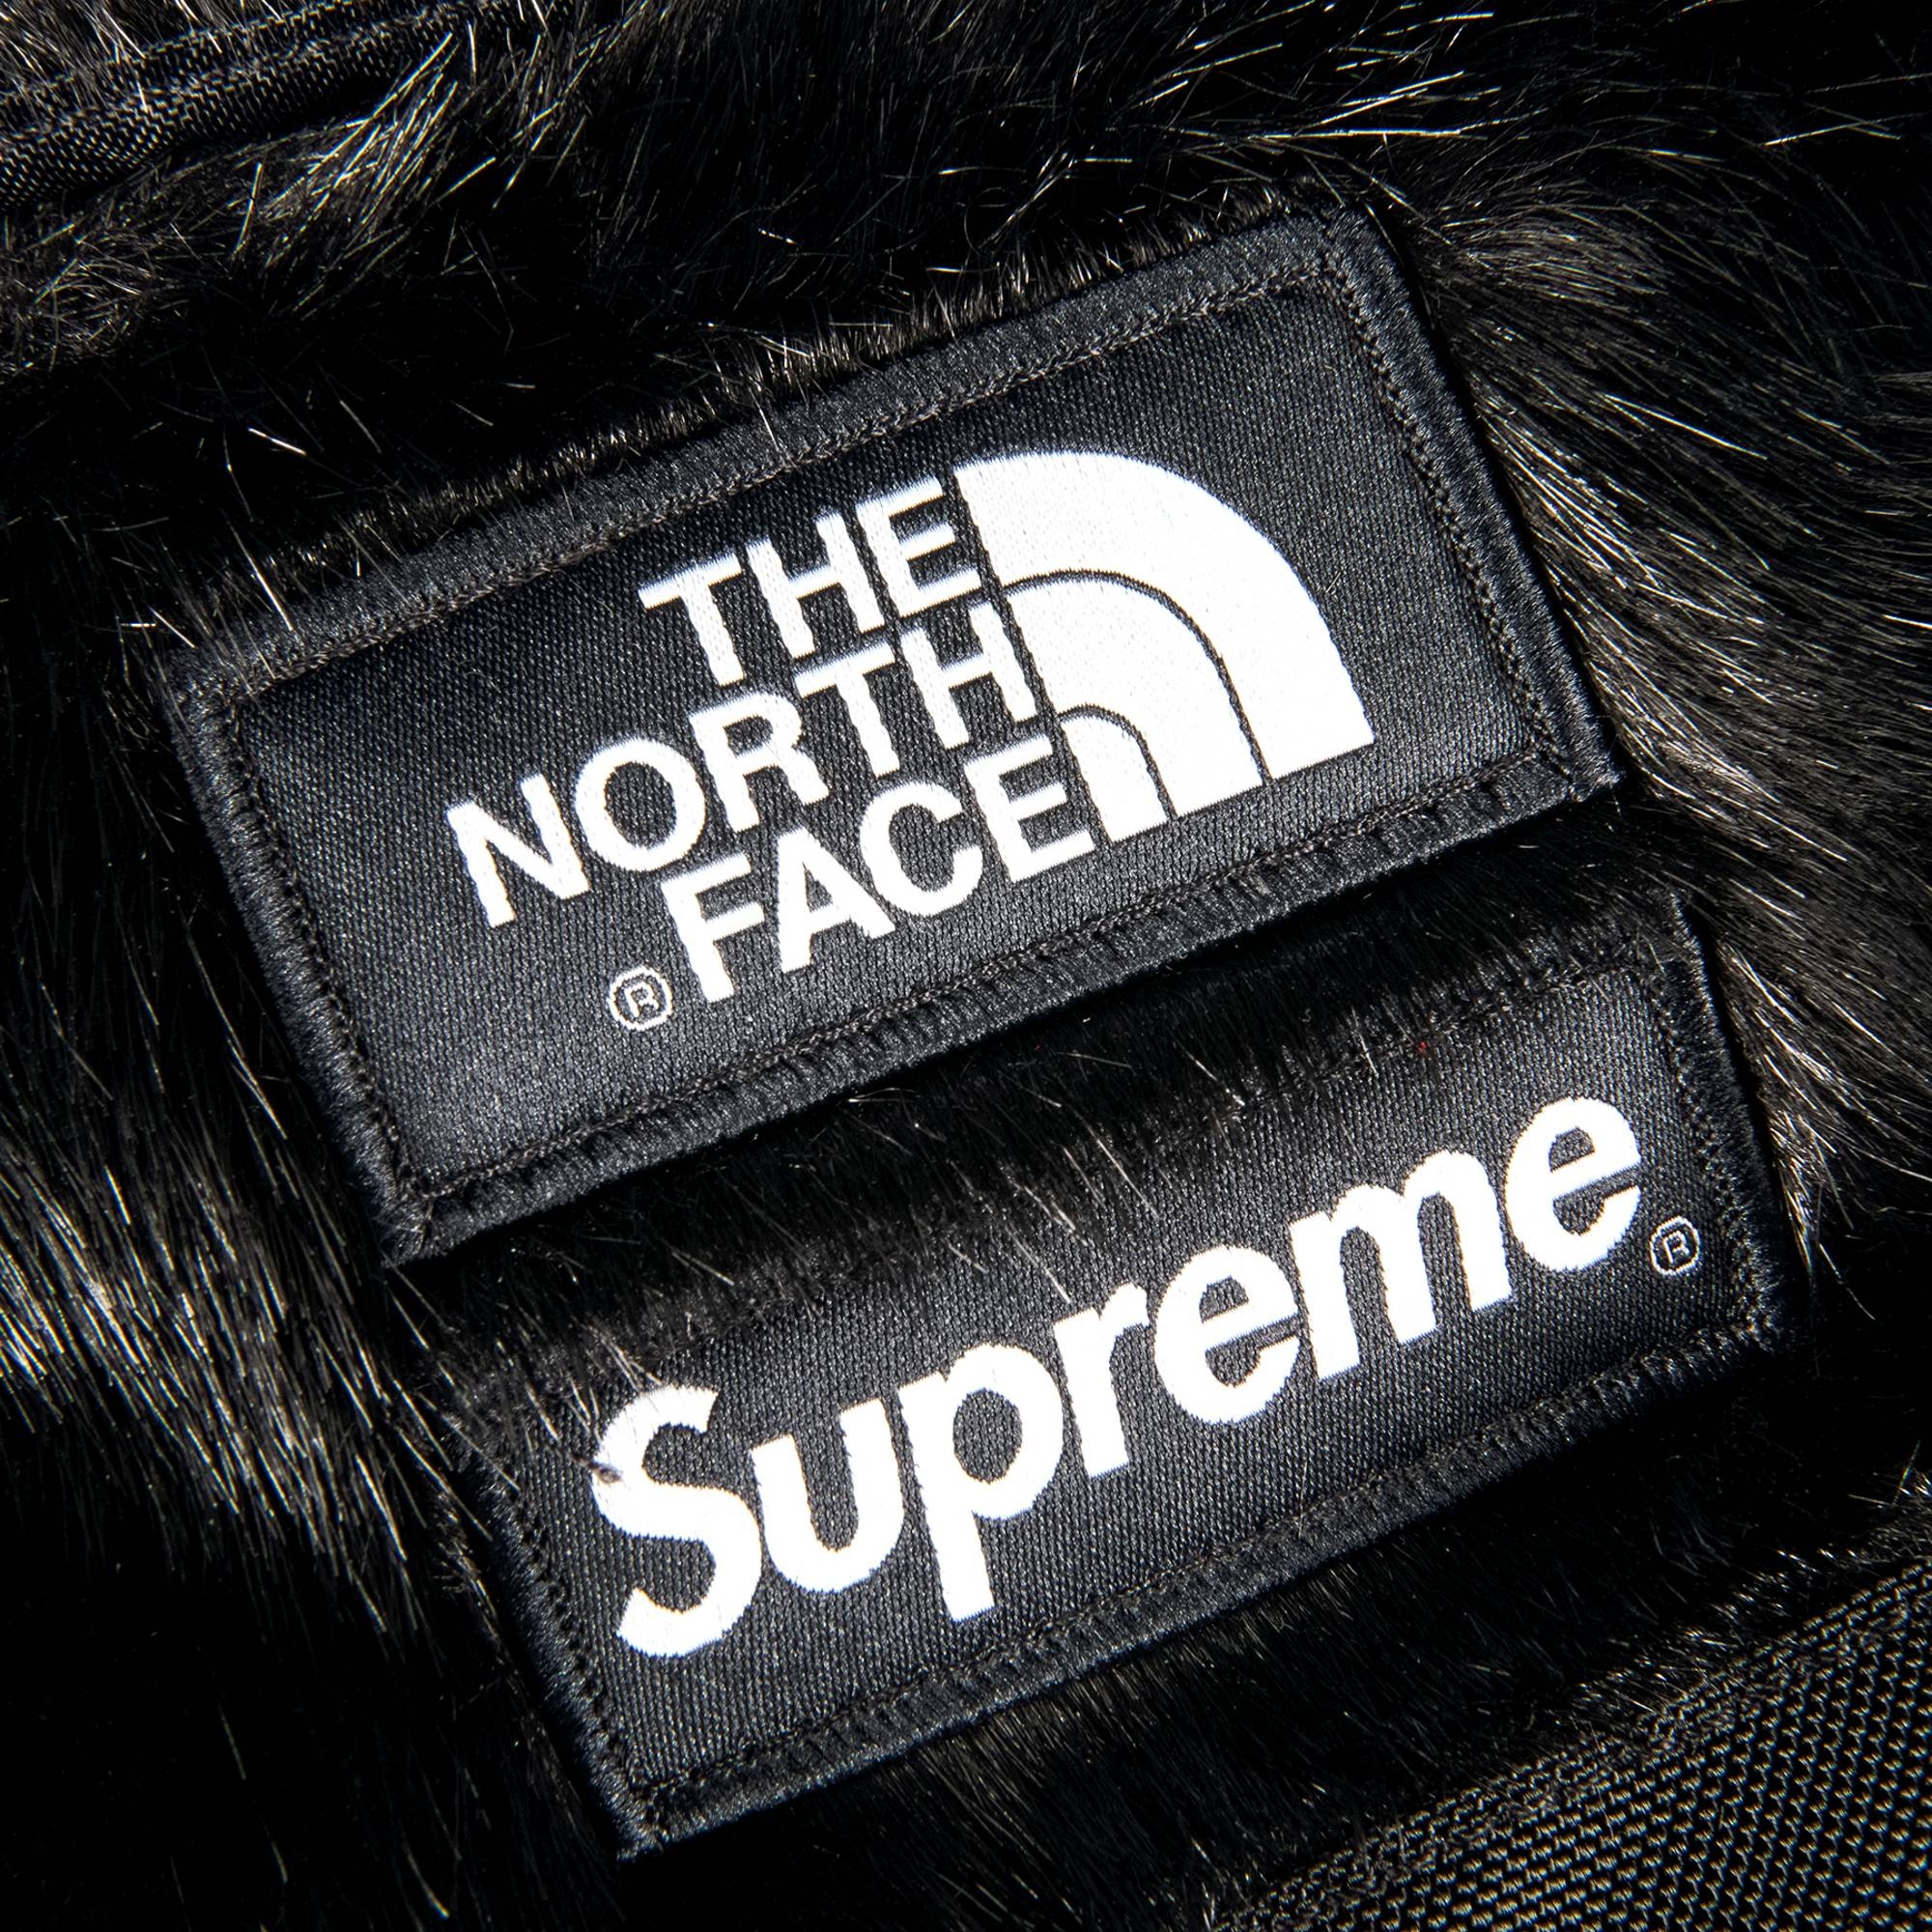 Supreme Supreme x The North Face Faux Fur Backpack 'Black' | REVERSIBLE